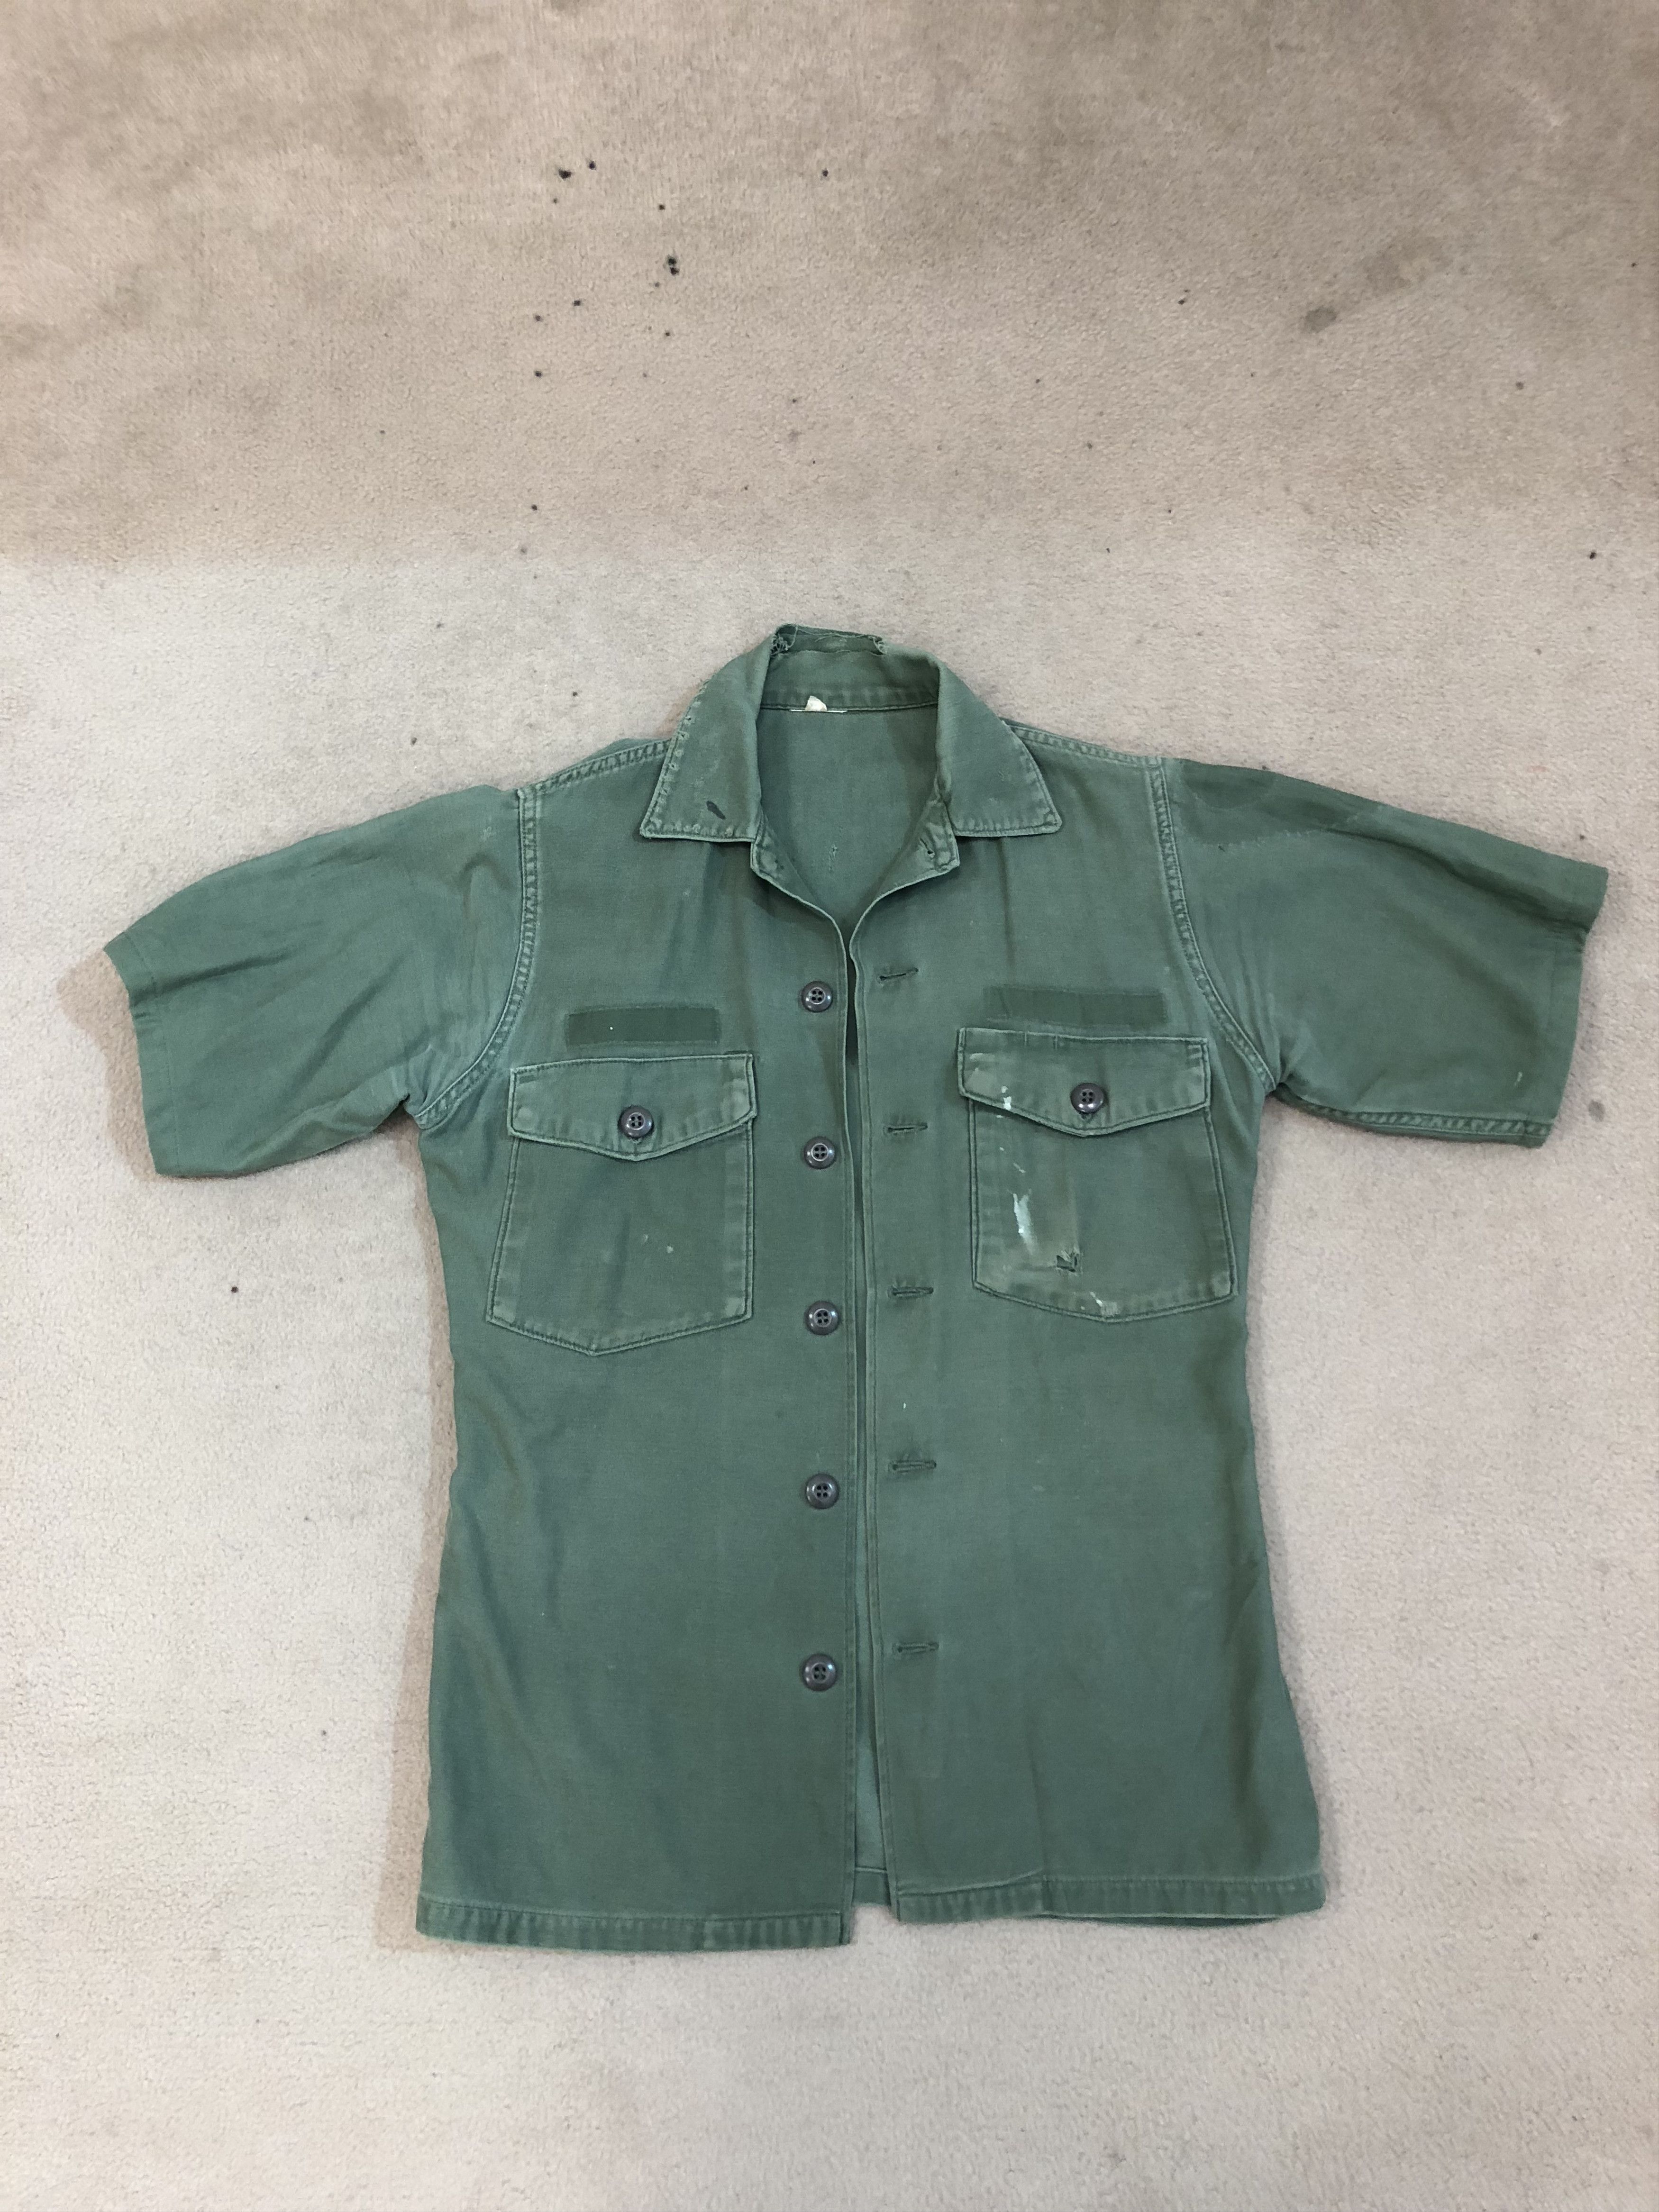 Vintage Vintage Army Shirt Size US S / EU 44-46 / 1 - 3 Preview